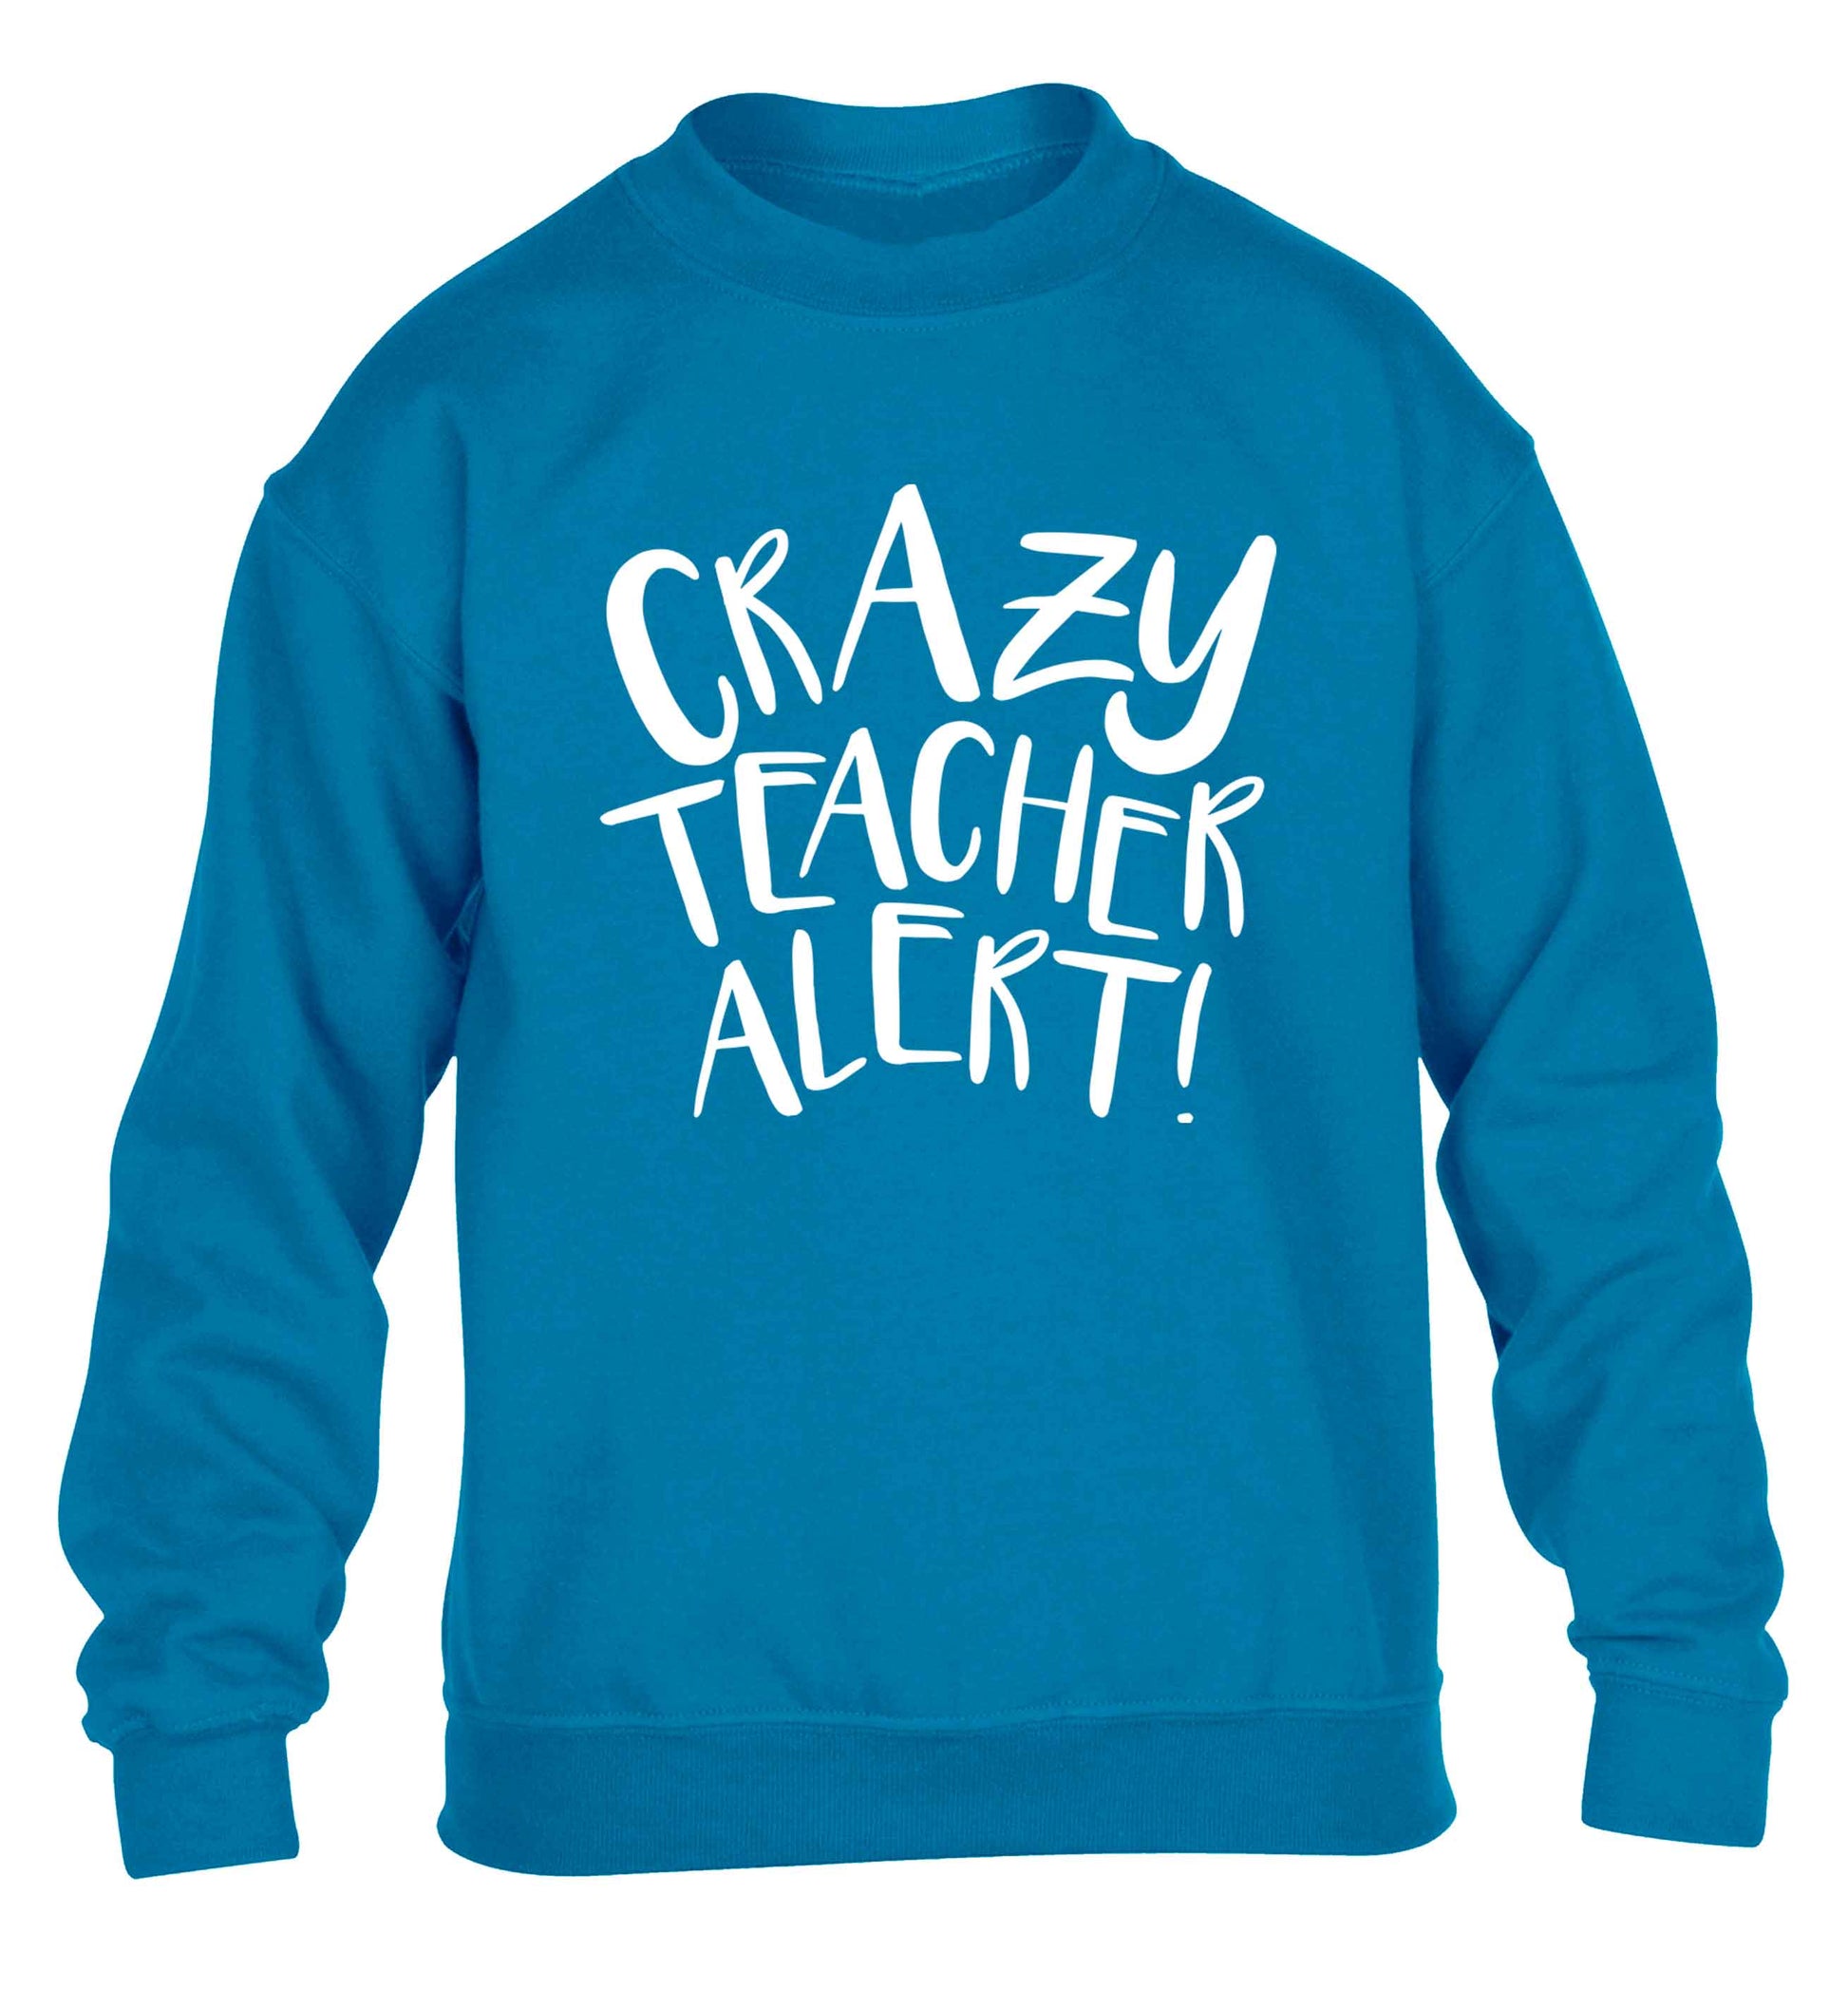 Crazy teacher alert children's blue sweater 12-13 Years